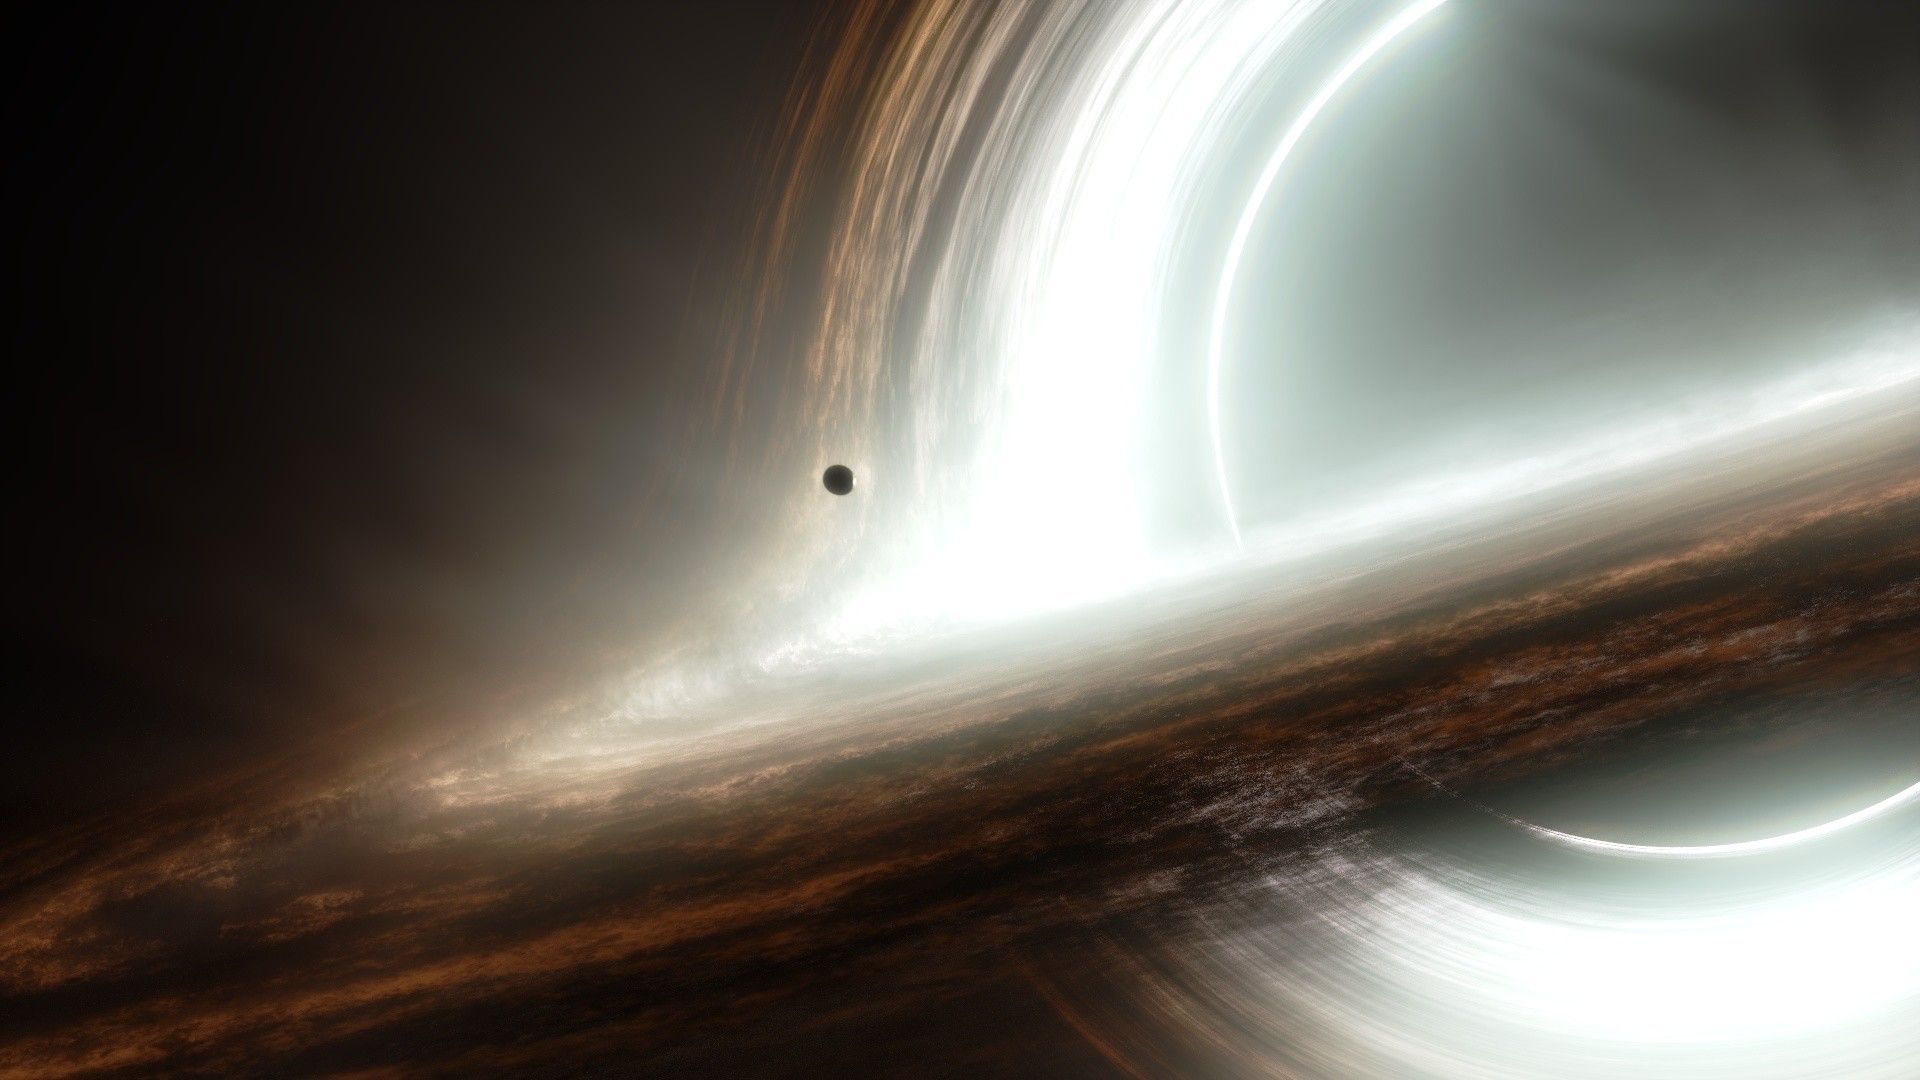 Interstellar Gargantua Wallpaper. Black hole wallpaper, Interstellar, Black hole